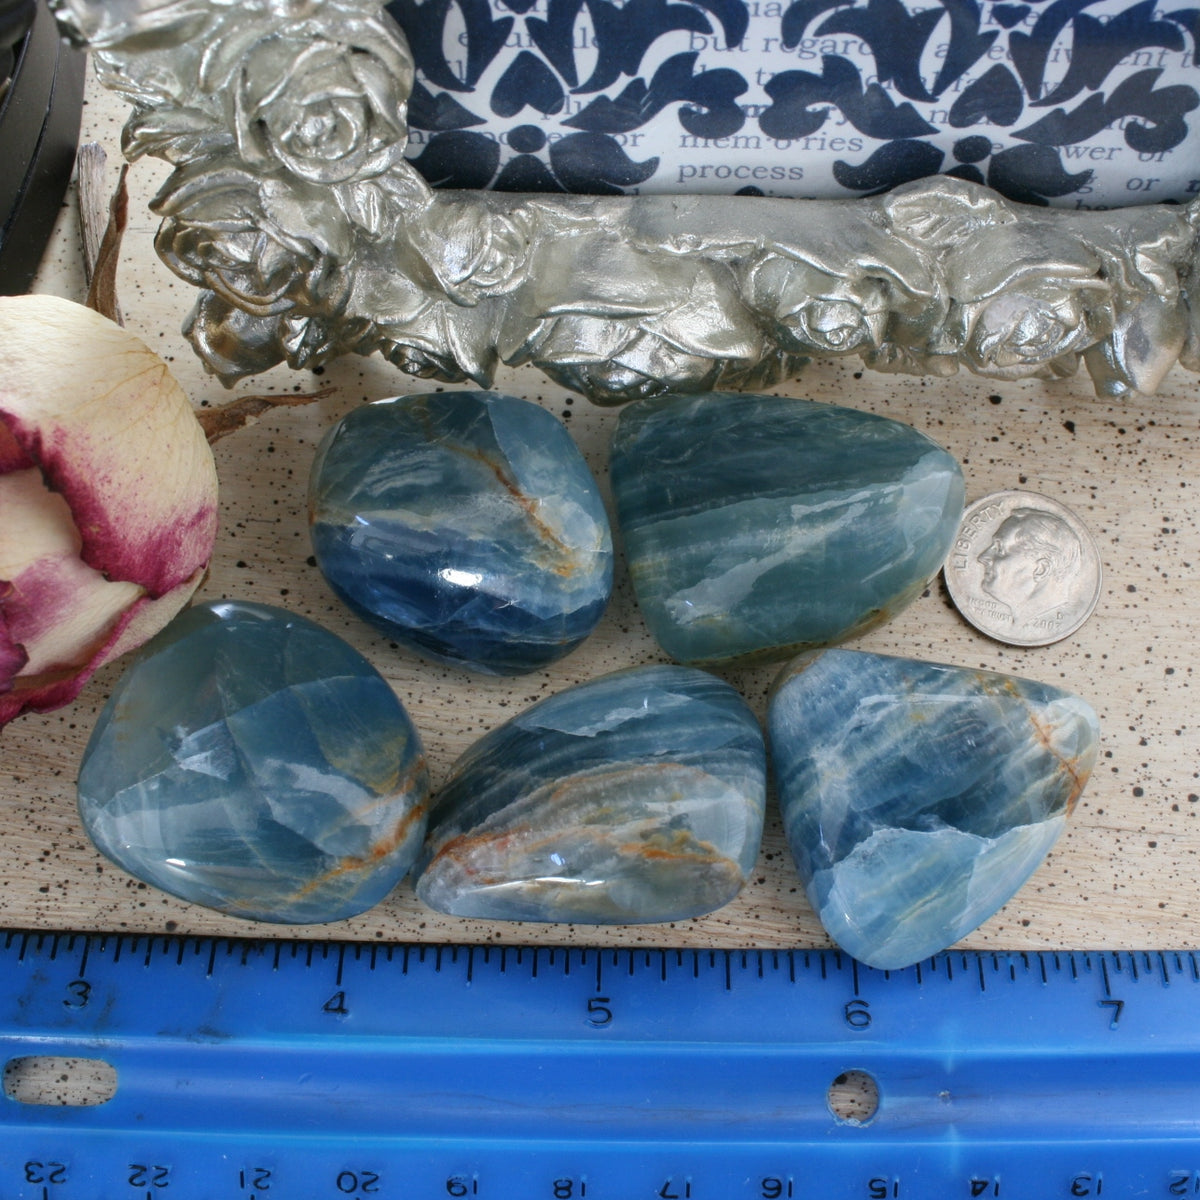 Blue Calcite / Blue Onyx Tumbled Stone from Argentina, also called Lemurian Aquatine Calcite, TUM4